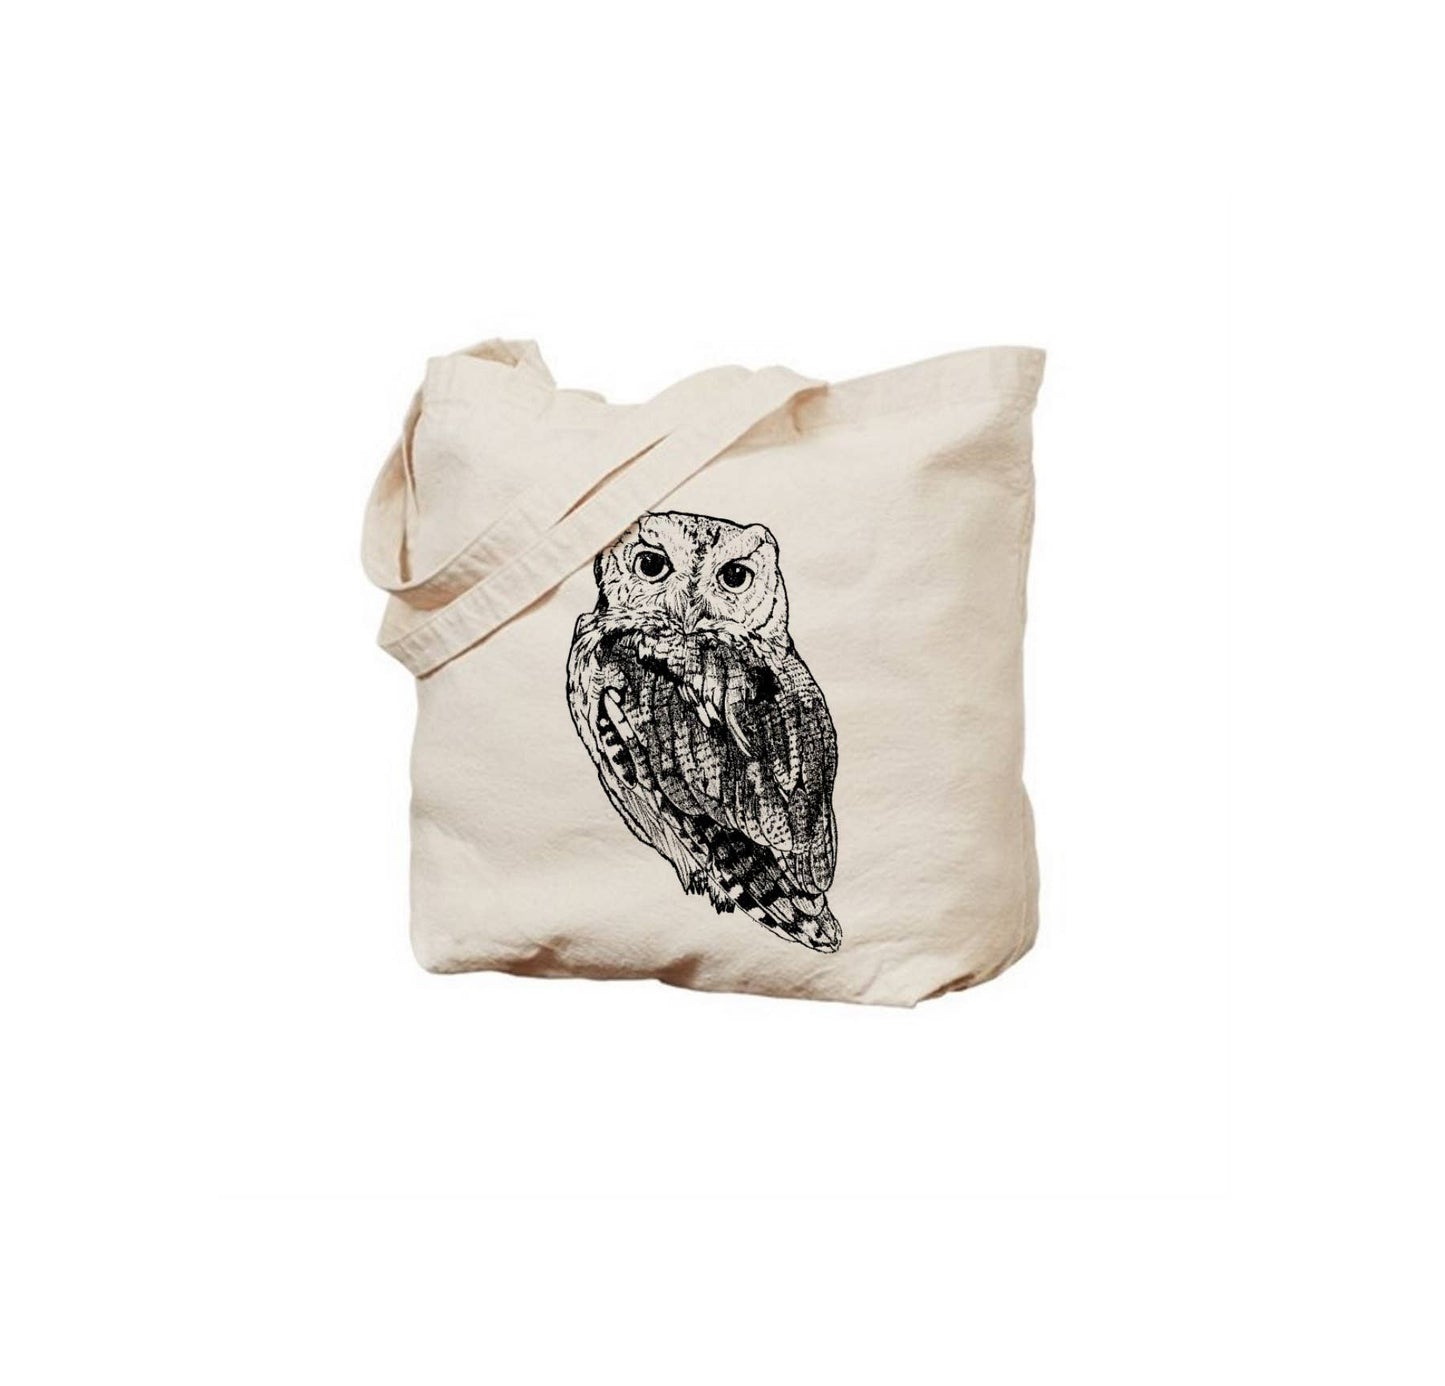 Owl Tote Bags